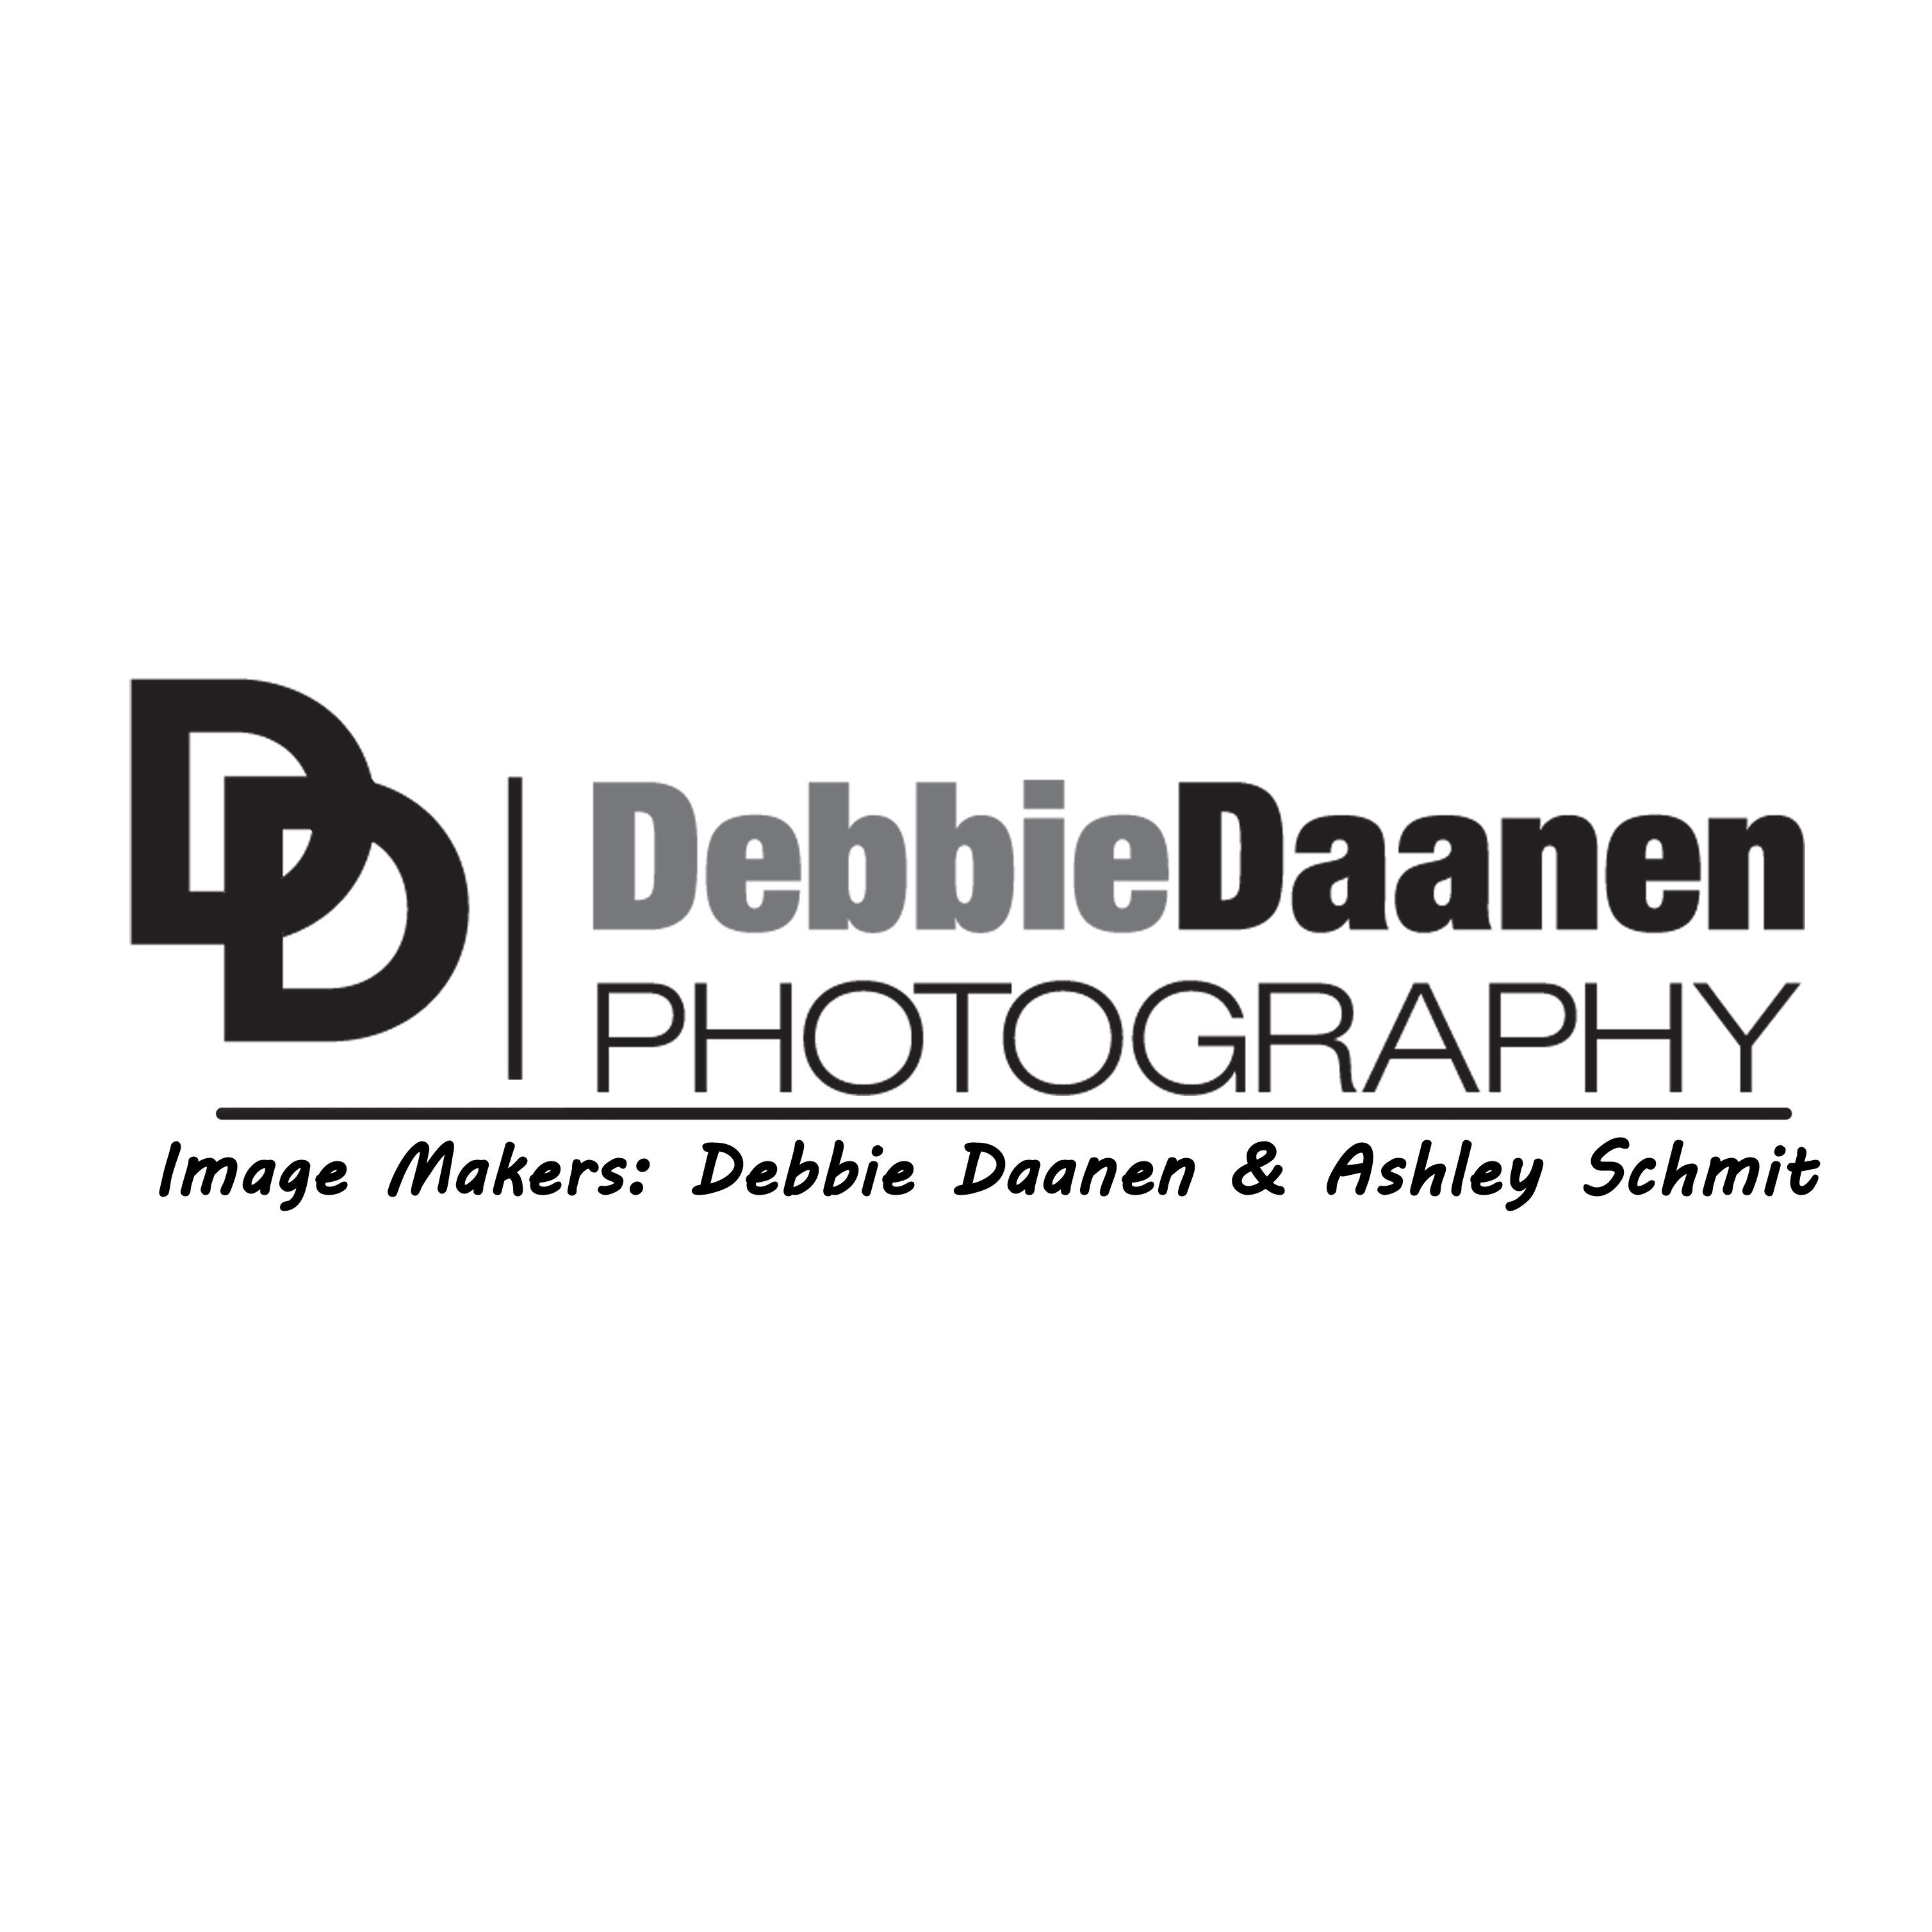 Debbie Daanen Photography - Appleton, WI 54911 - (920)739-3249 | ShowMeLocal.com